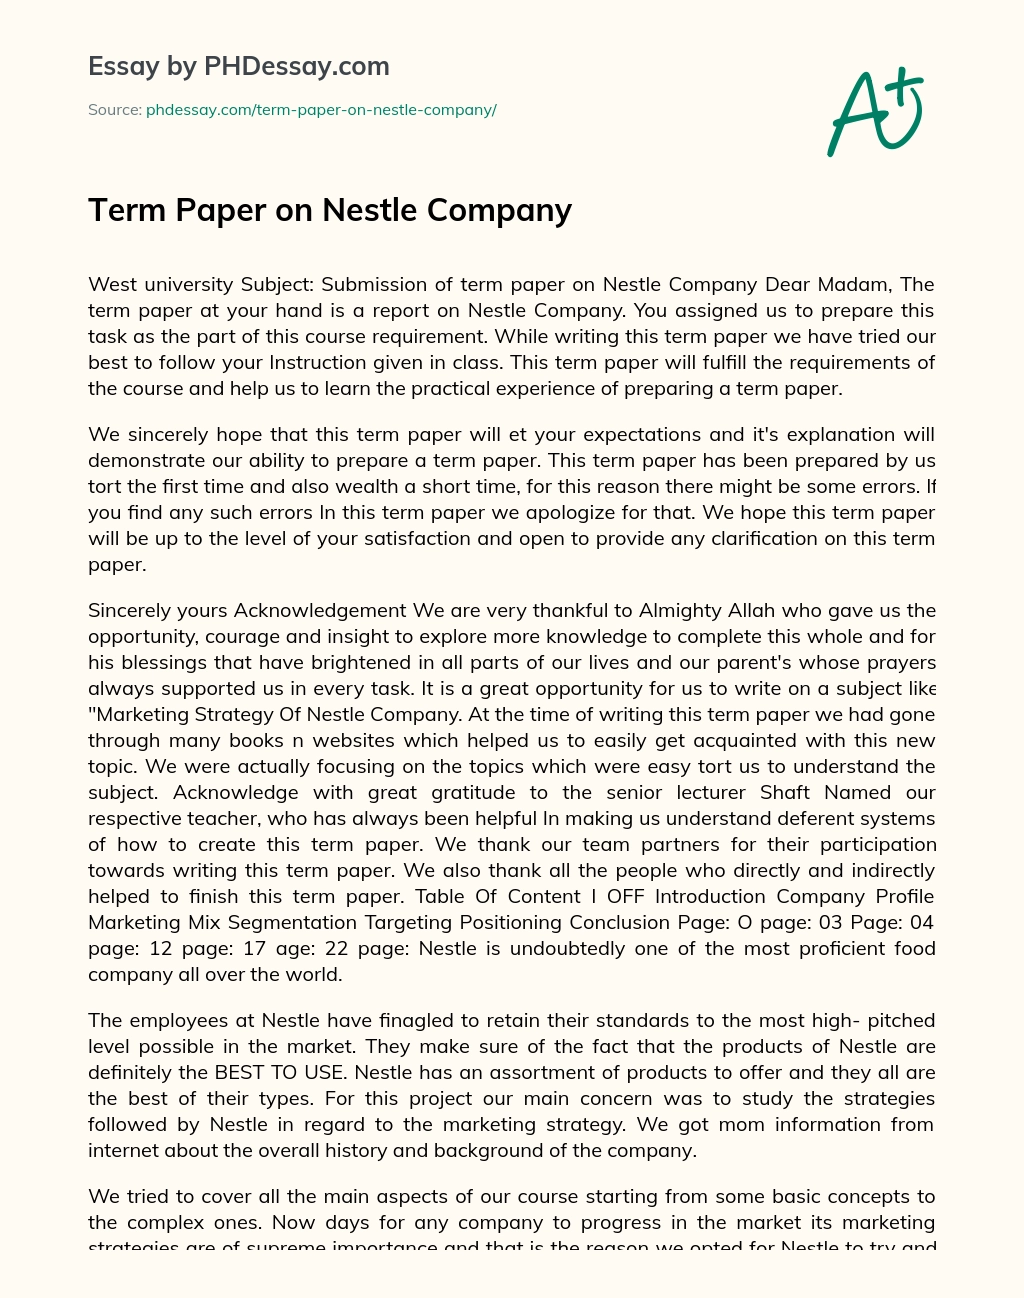 Term Paper on Nestle Company essay